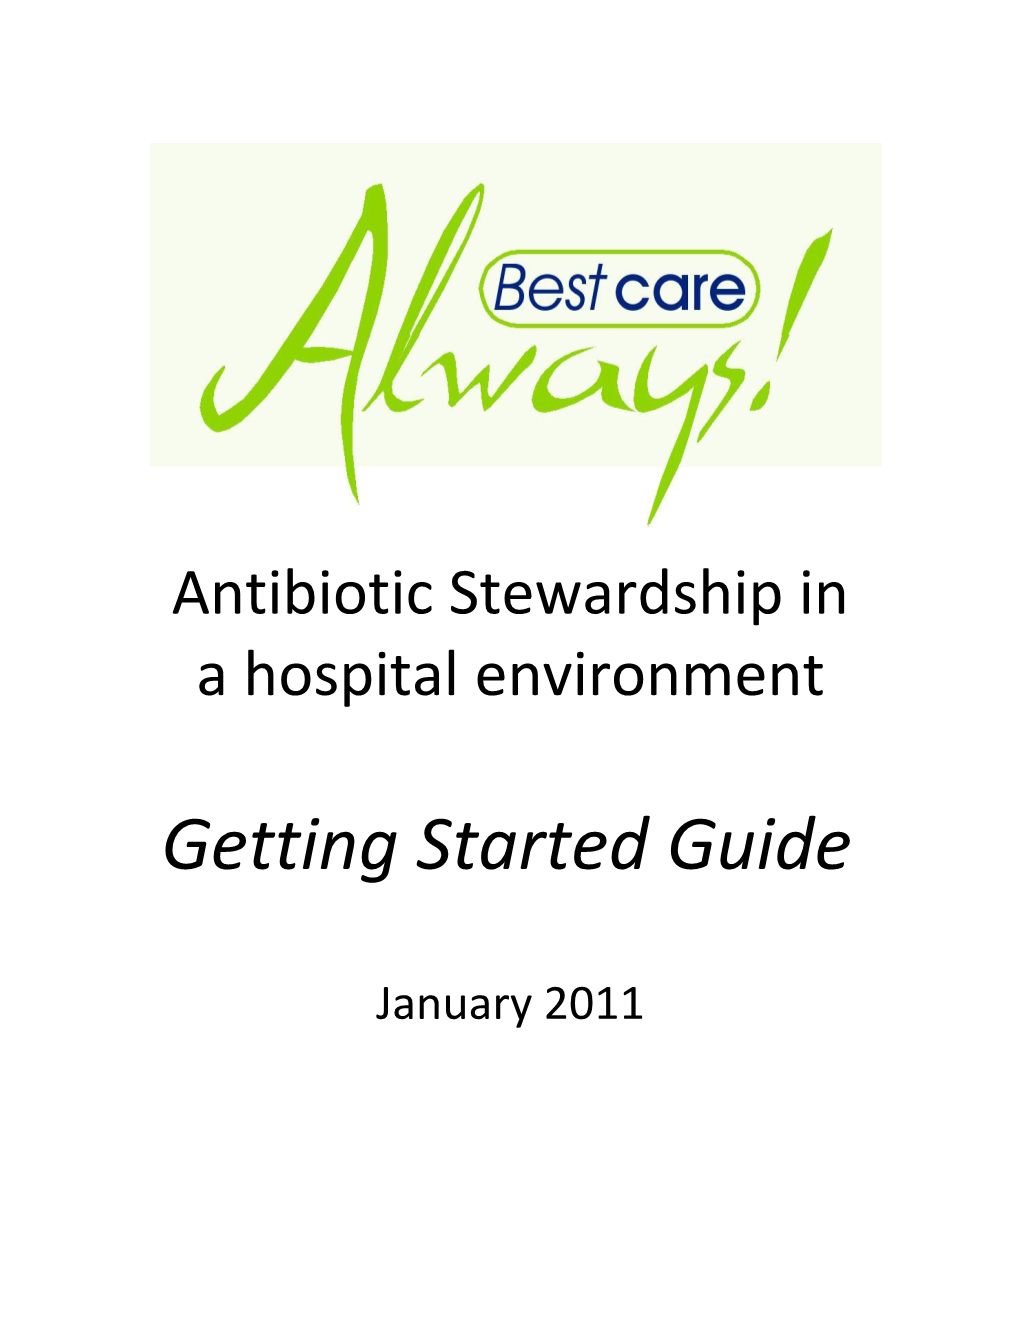 Antibiotic Stewardship in a Hospital Environment